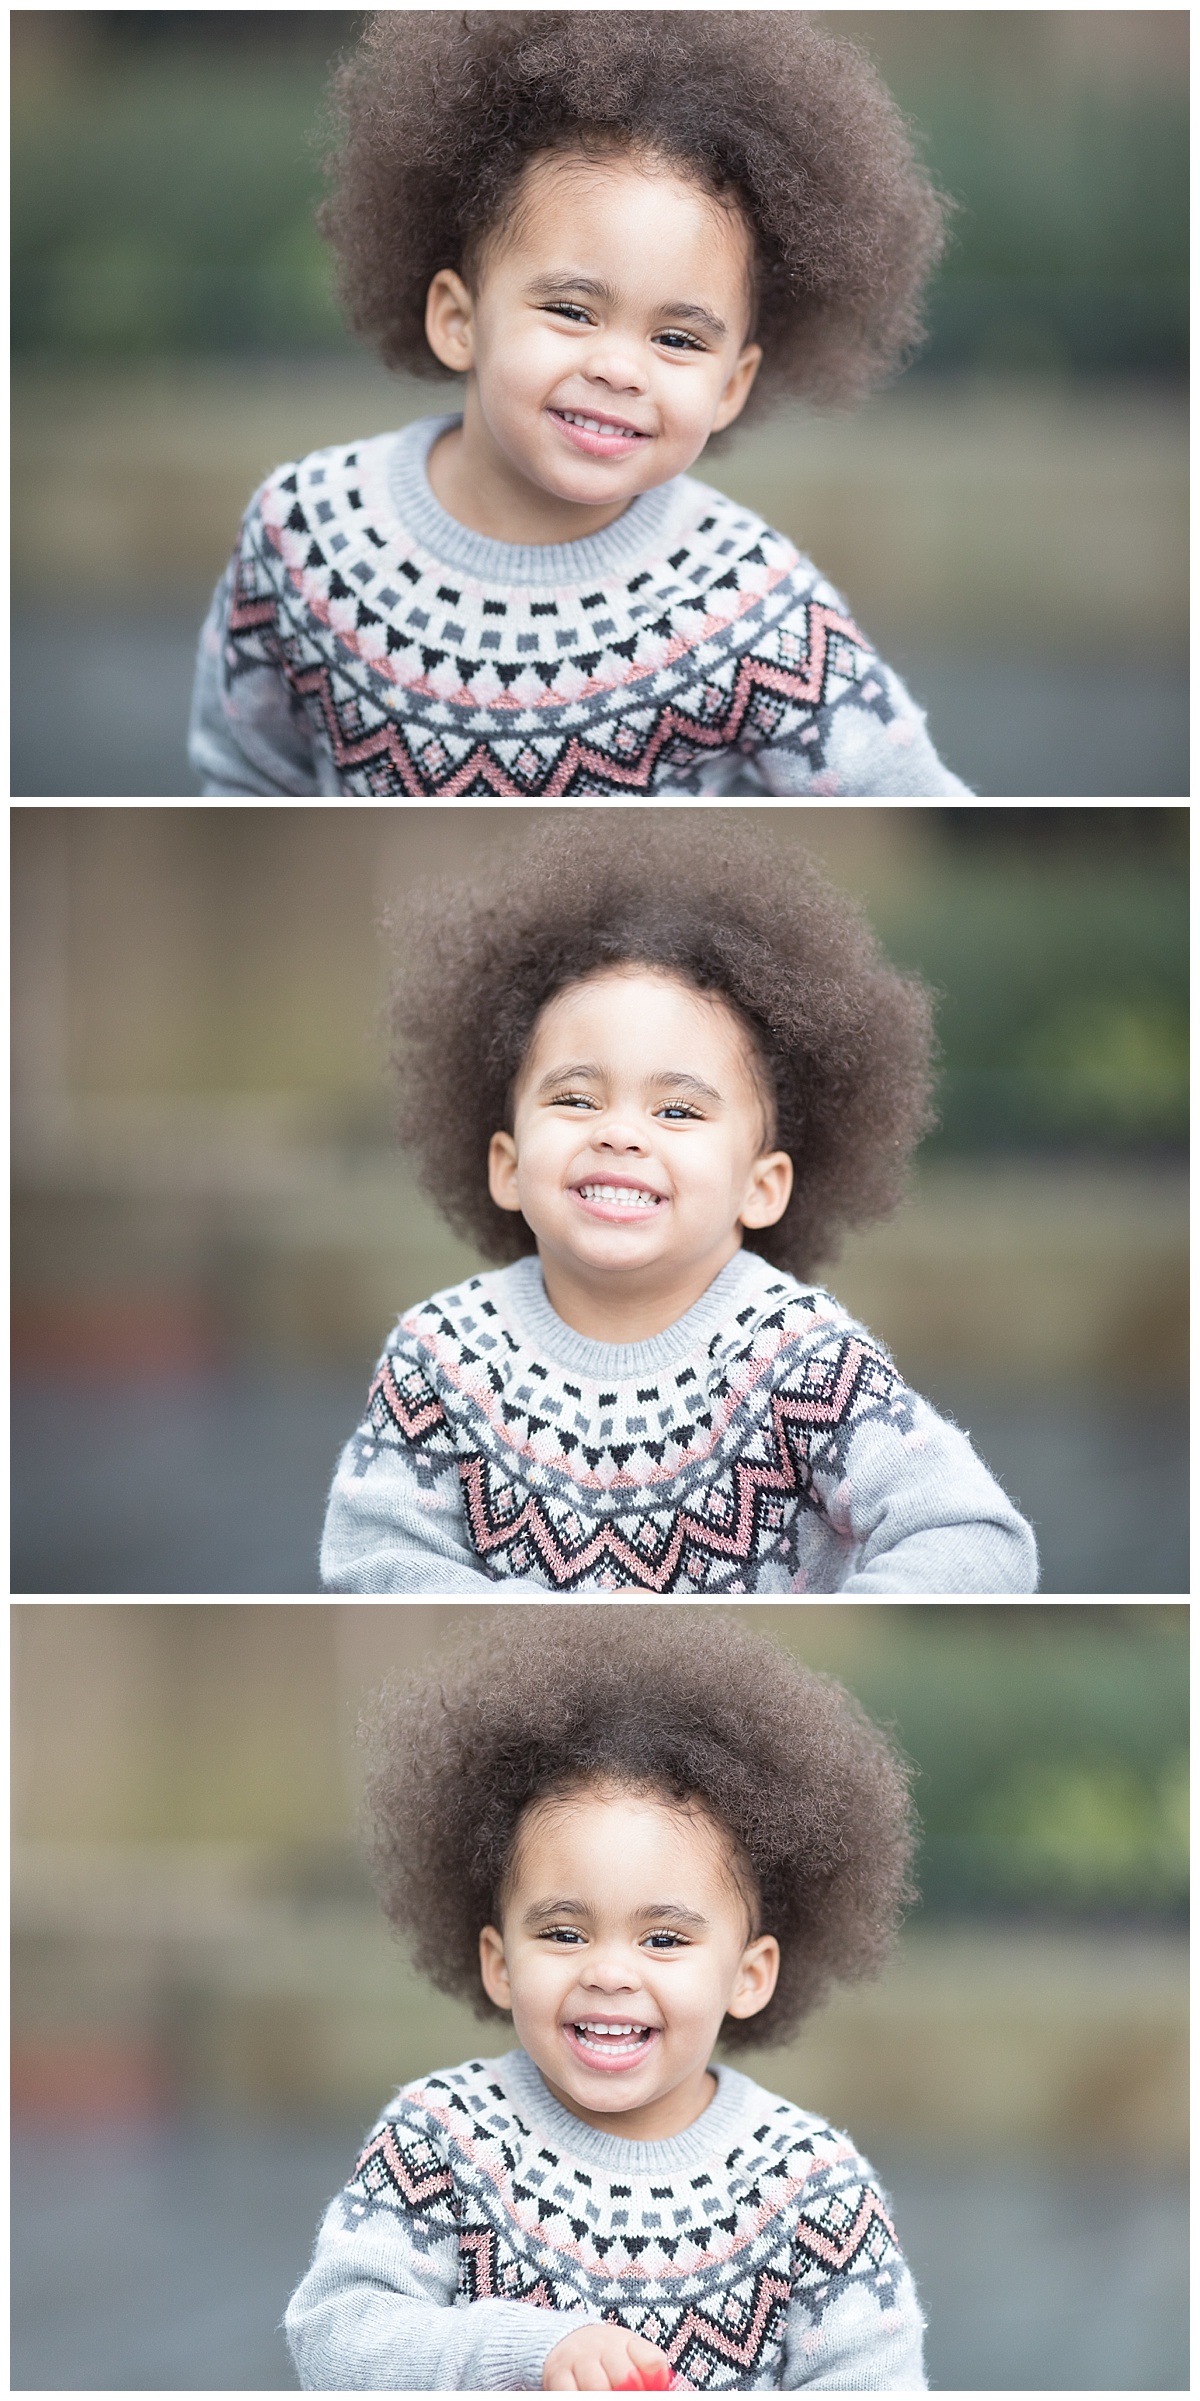 family photographer edinburgh, smiling girl with afro hair professional photography by beautiful bairns photography Edinburgh